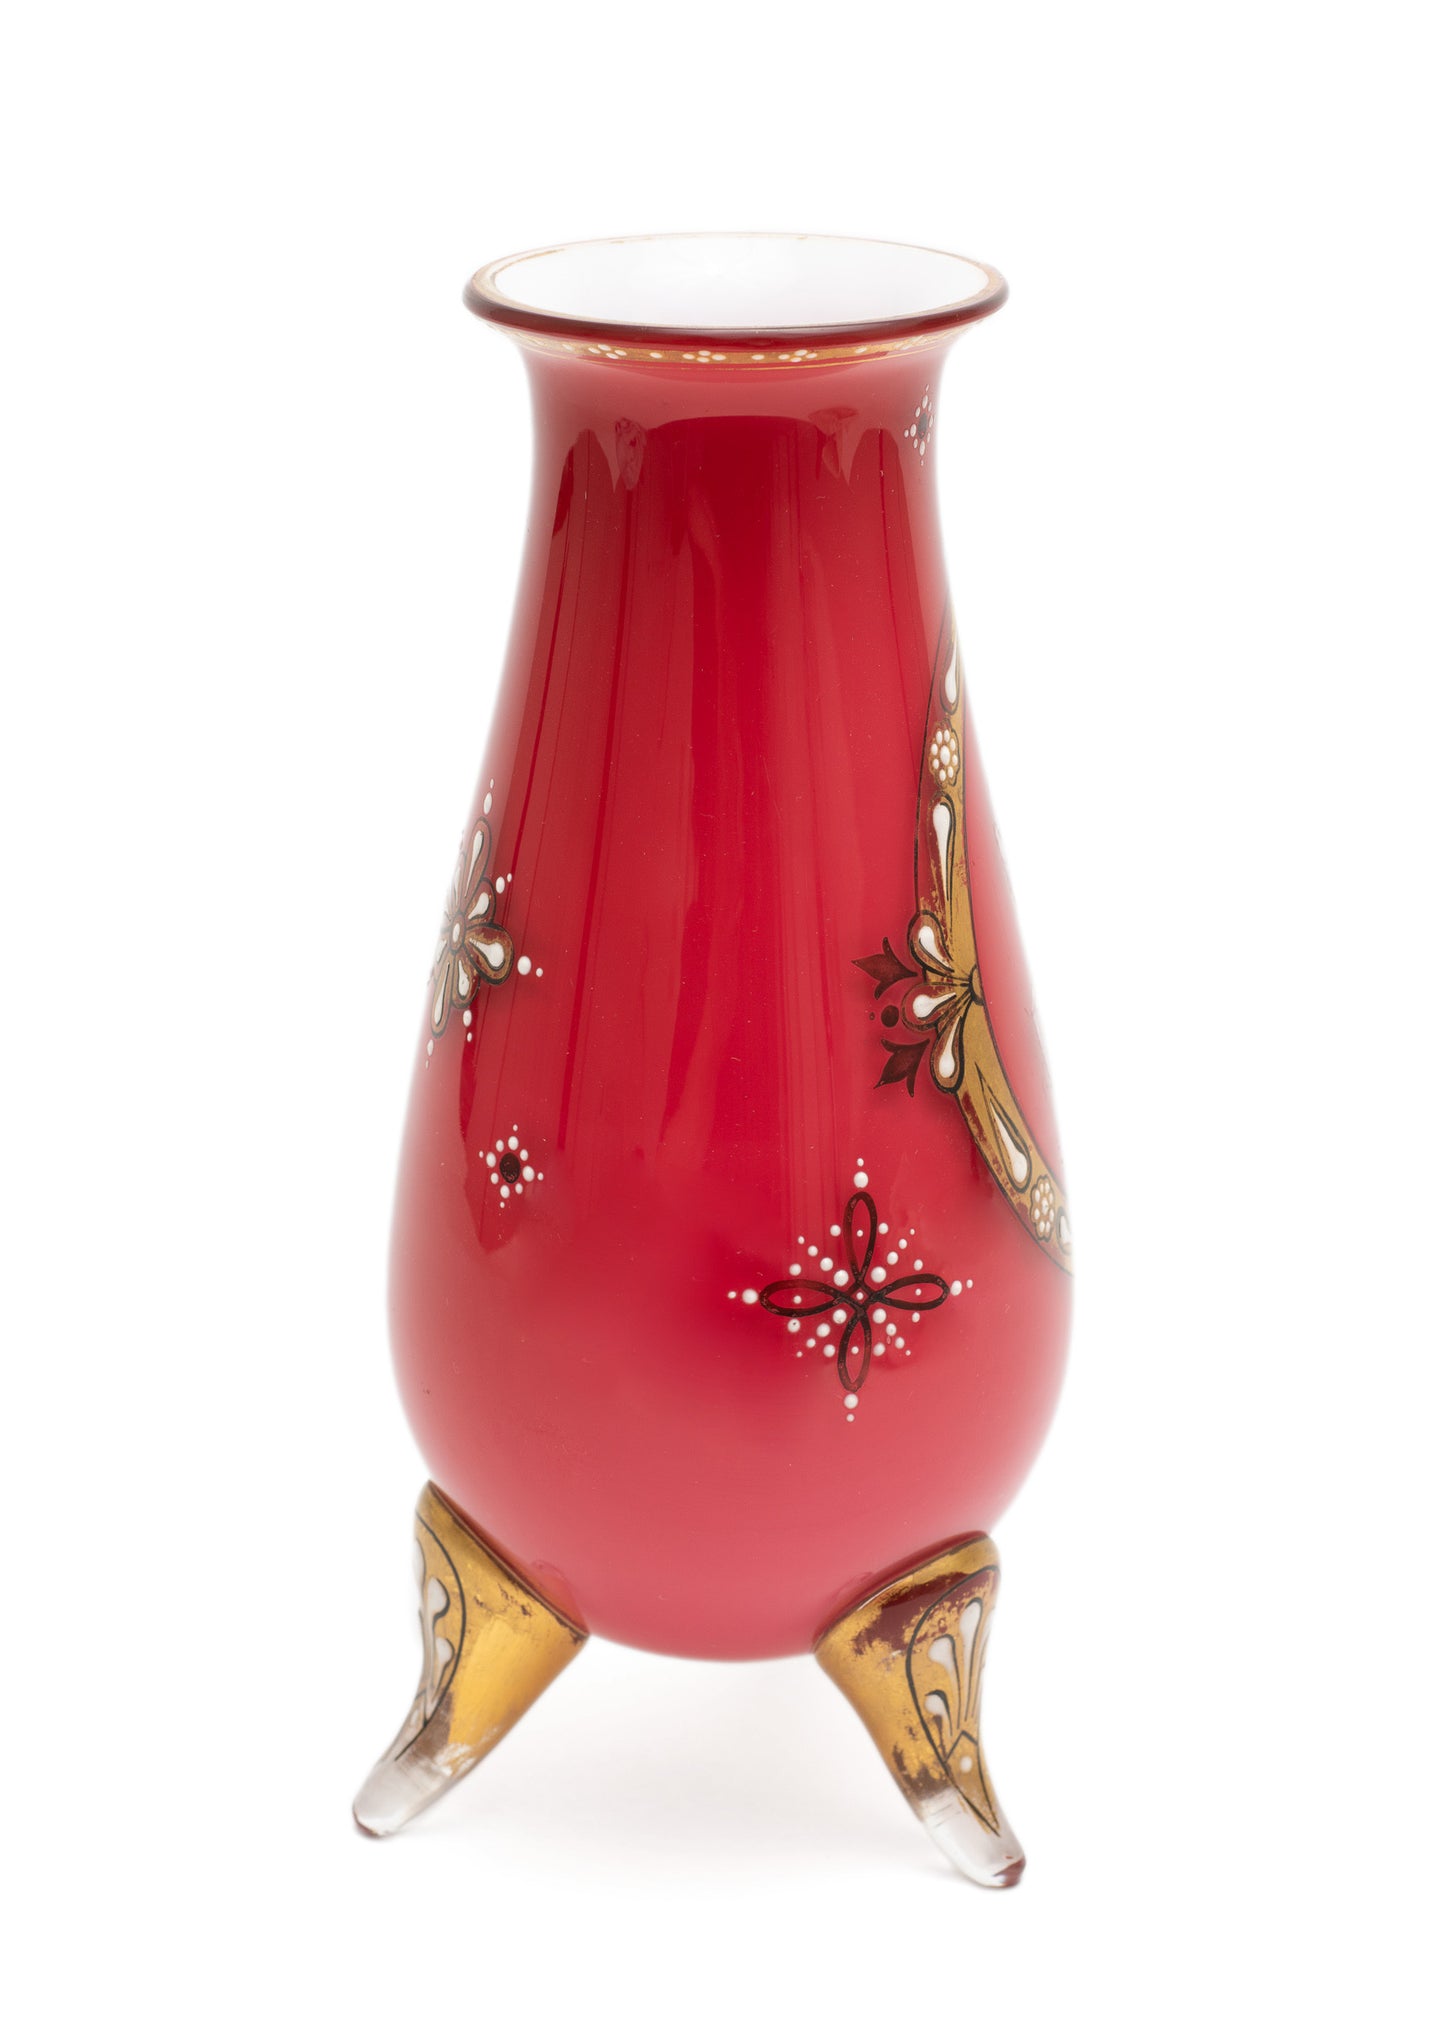 Antique Bohemian Art Glass Vase with Enamel Classical Cameo Portrait c1880 (Code 2160)